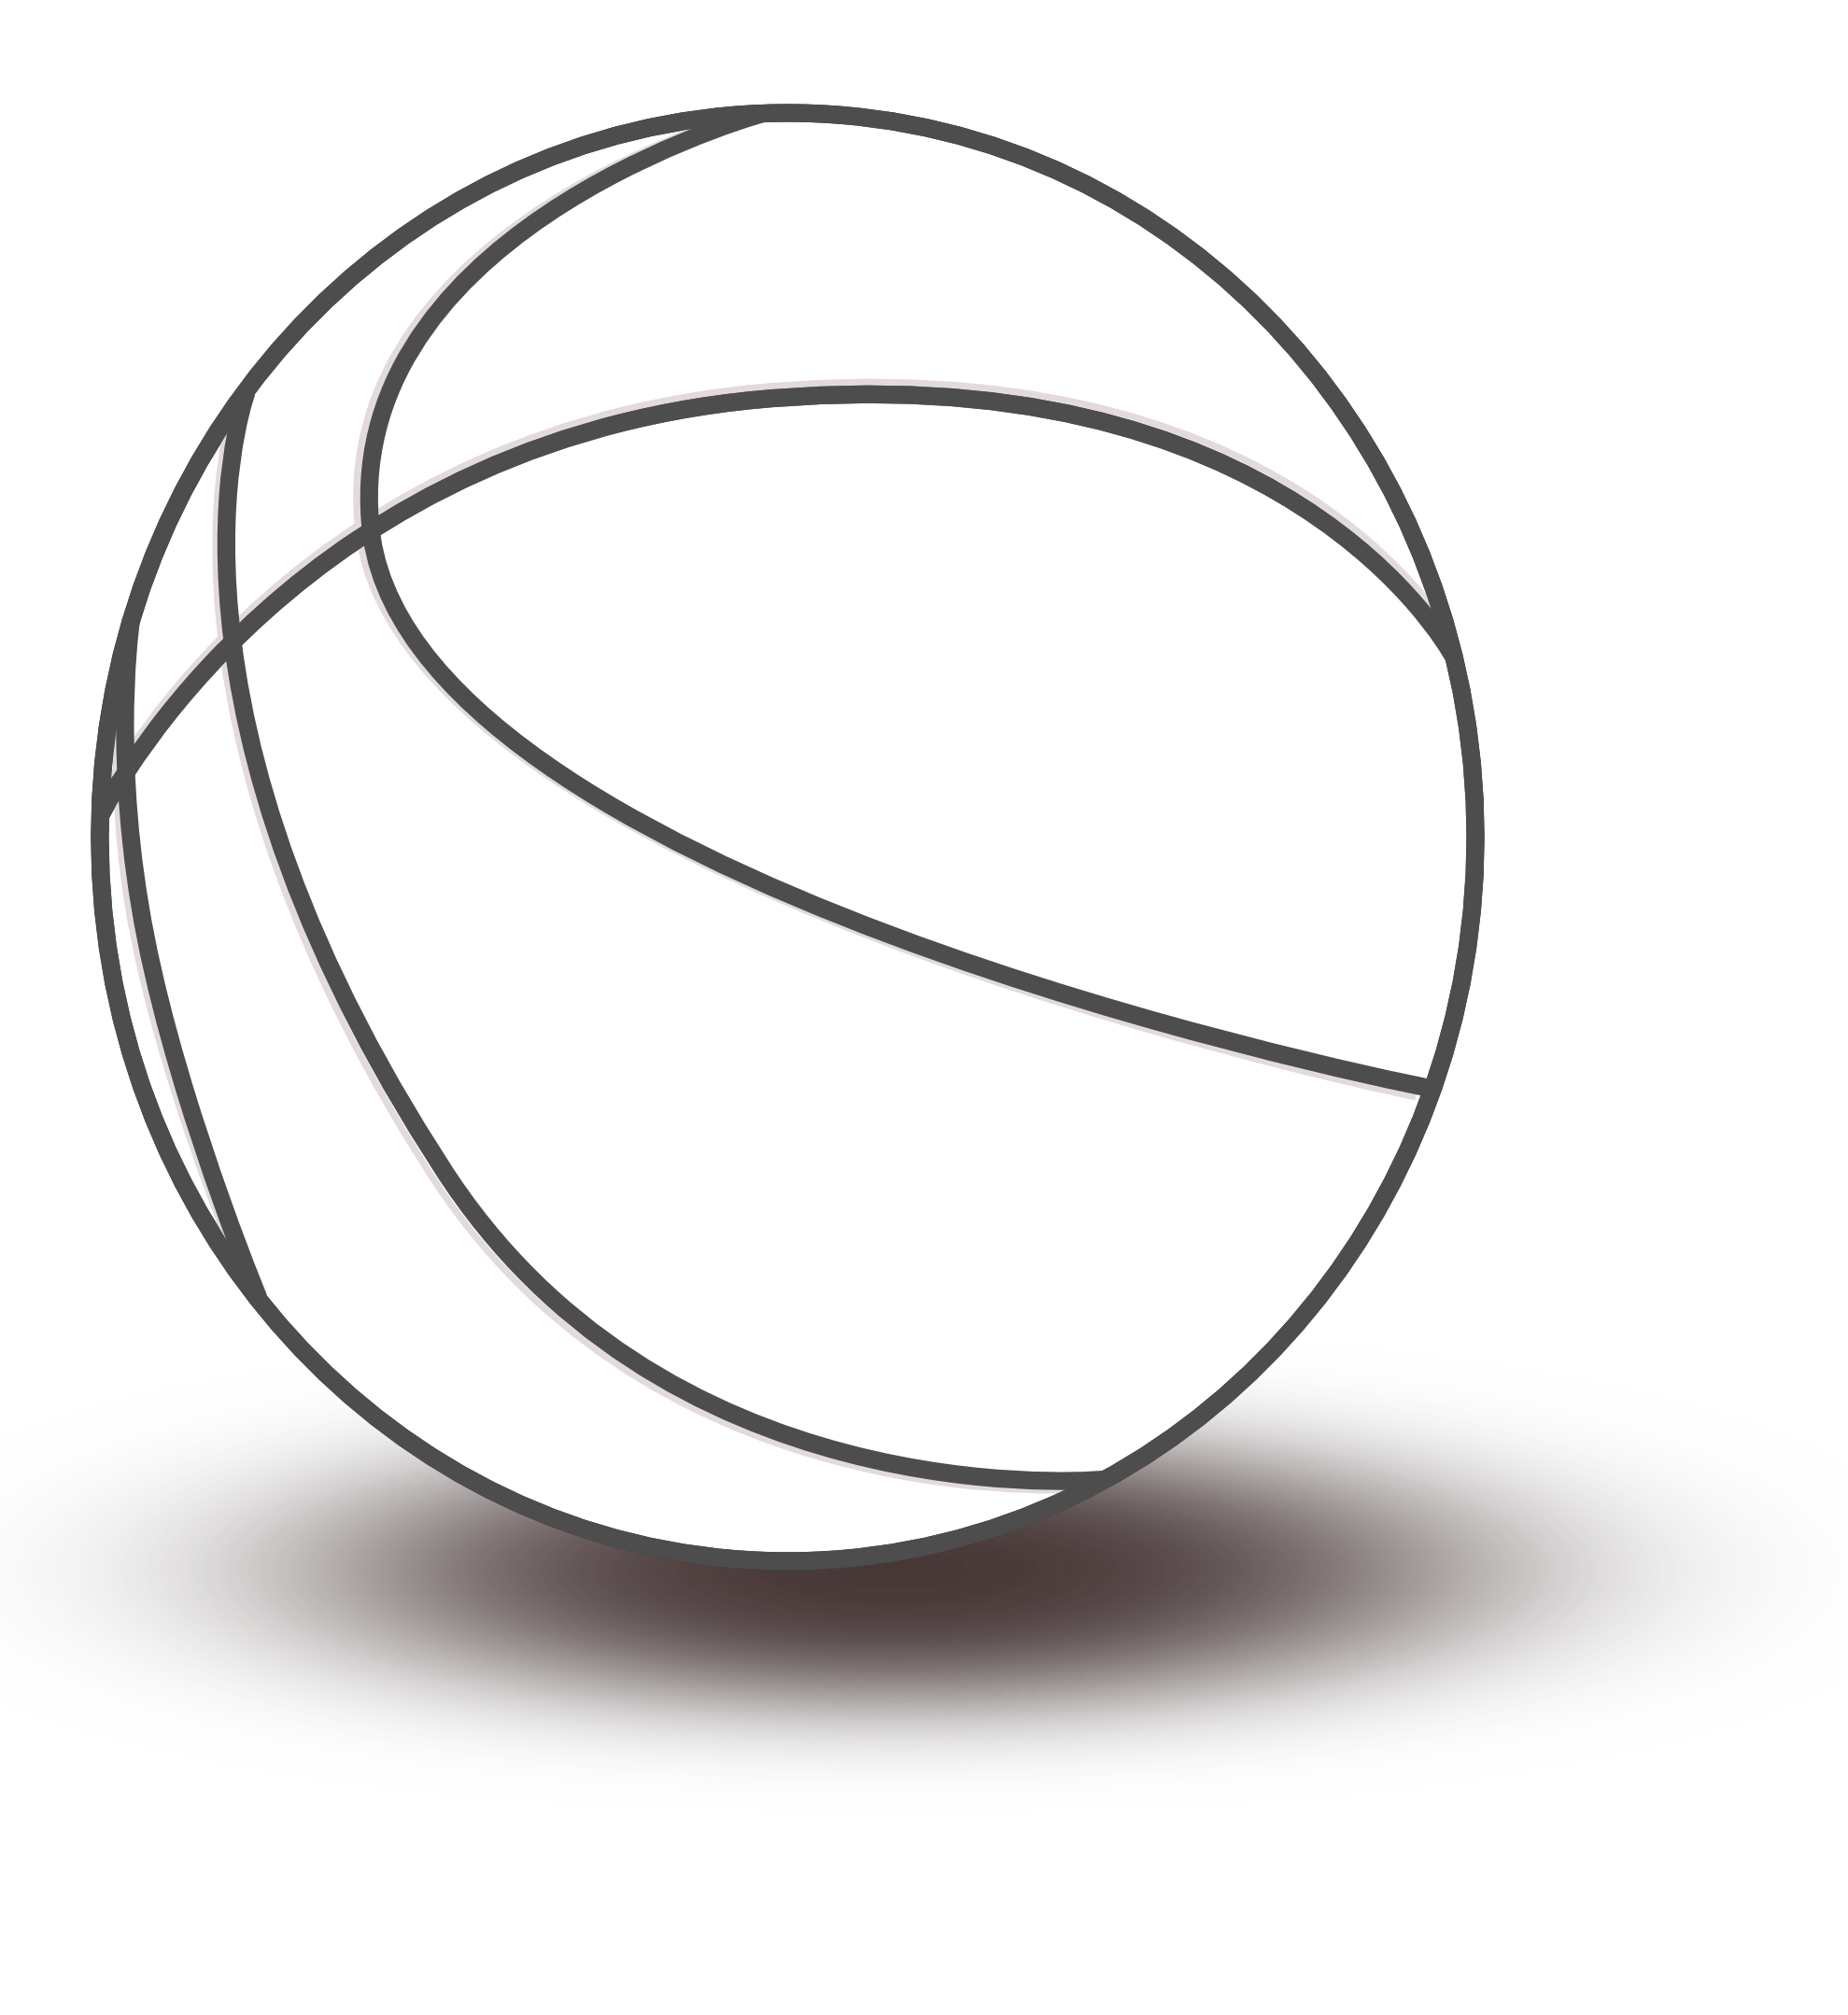 Basketball Ball Clipart Black And White | Clipart Panda - Free ...